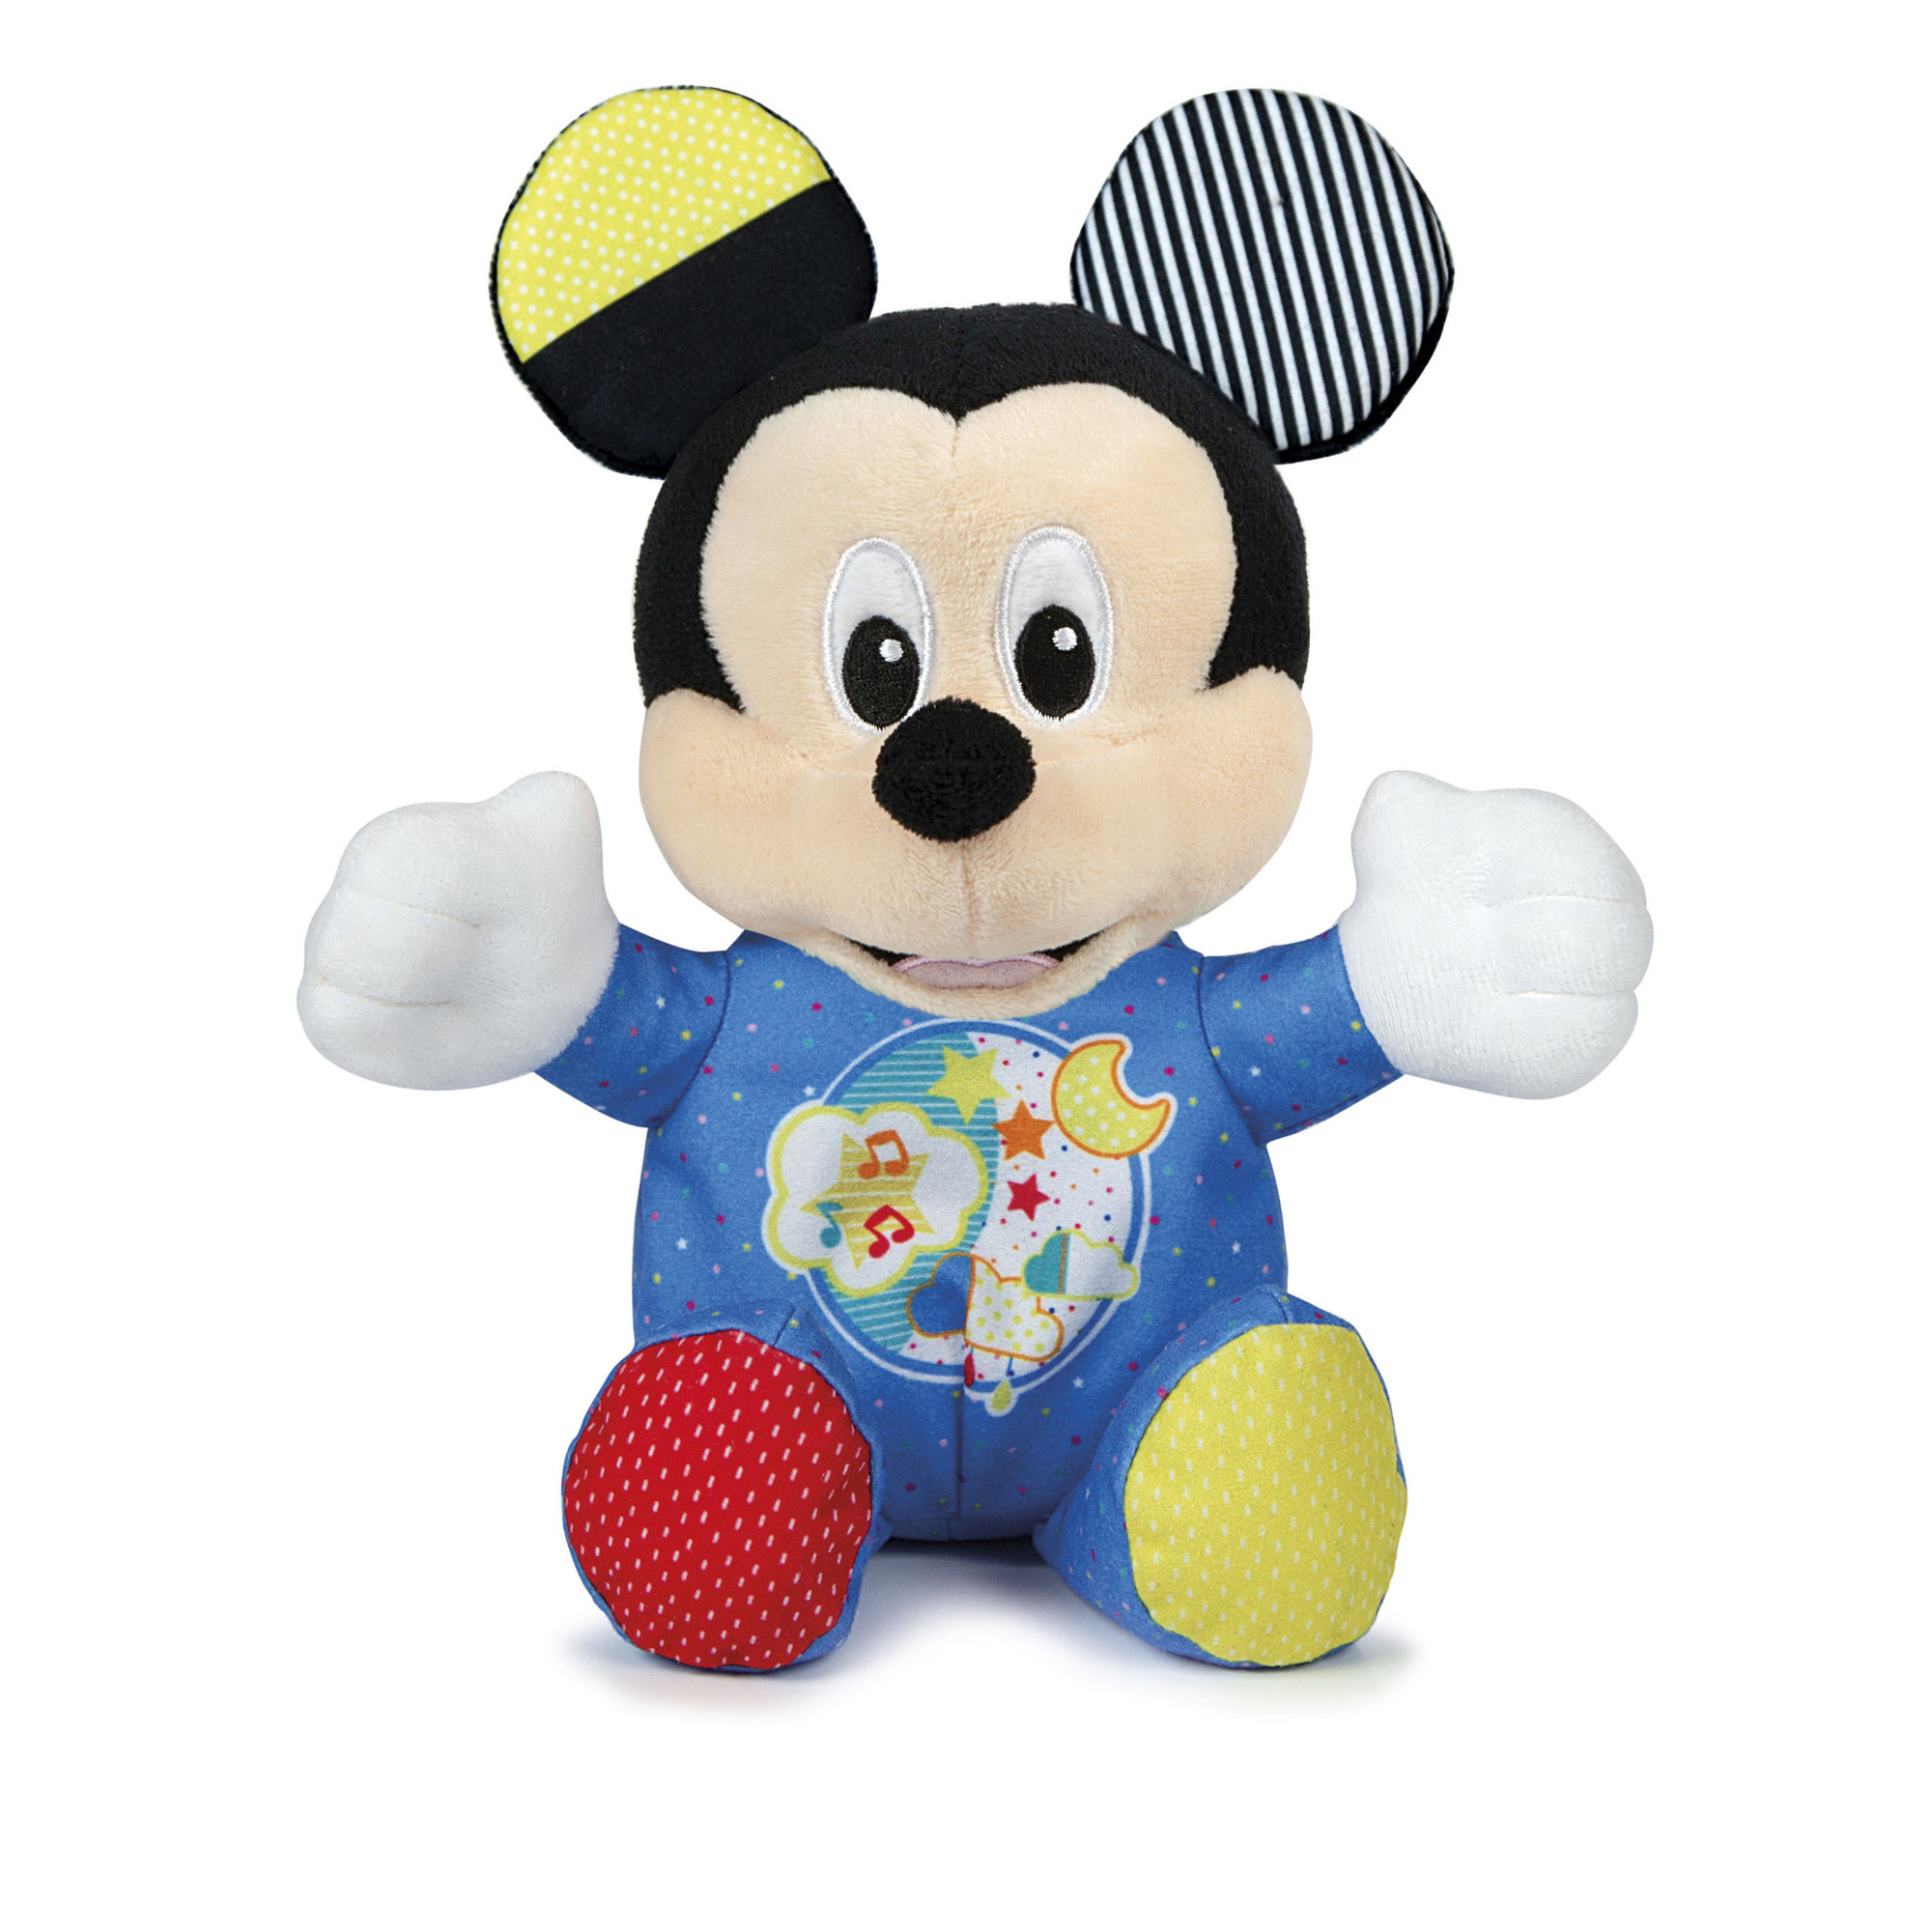 Baby Mickey peluche interattivo - Clementoni, Disney